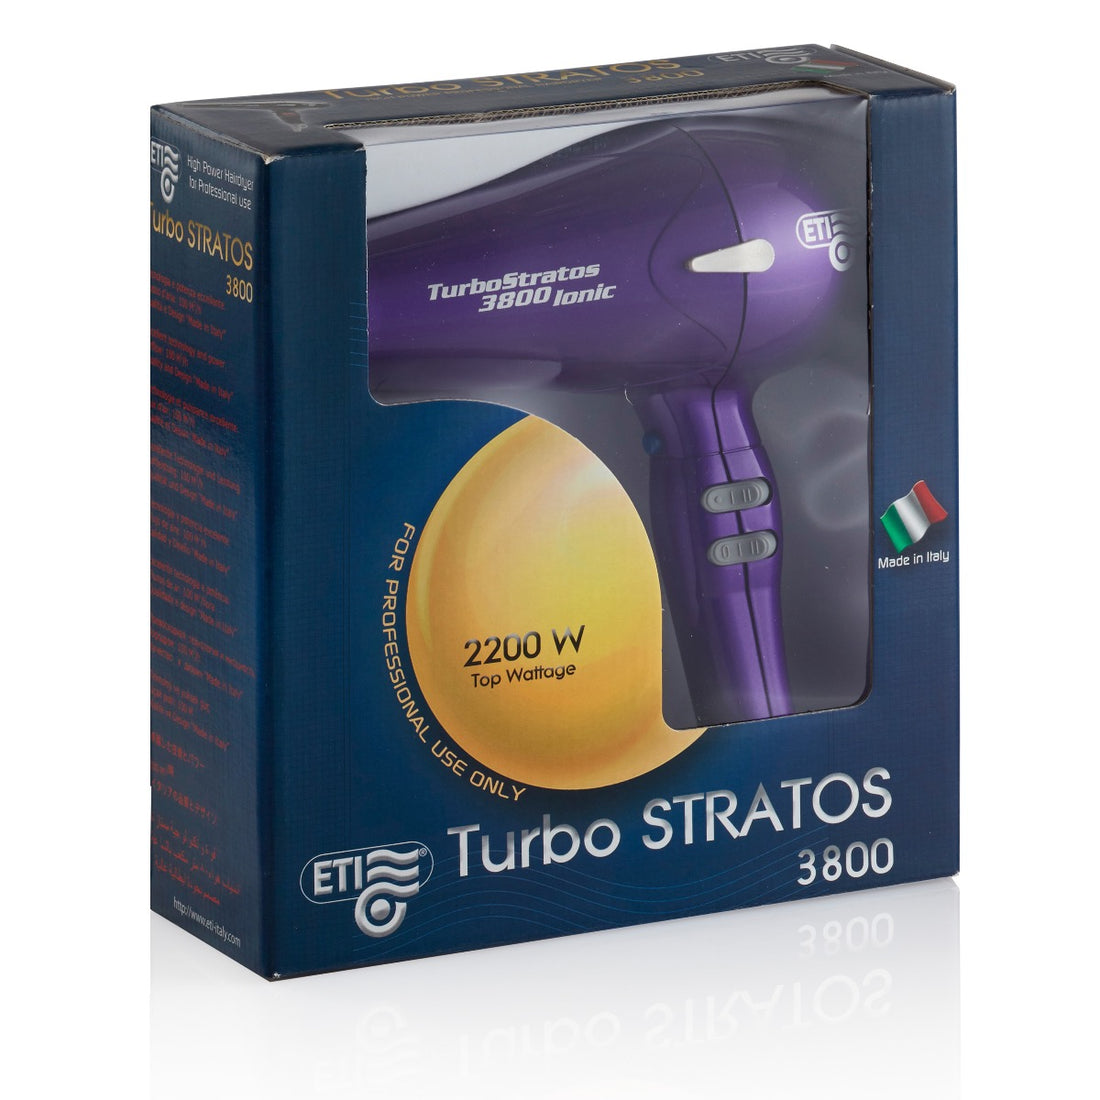 ETI Turbo Stratus 3800 Ionic Hairdryer Purple